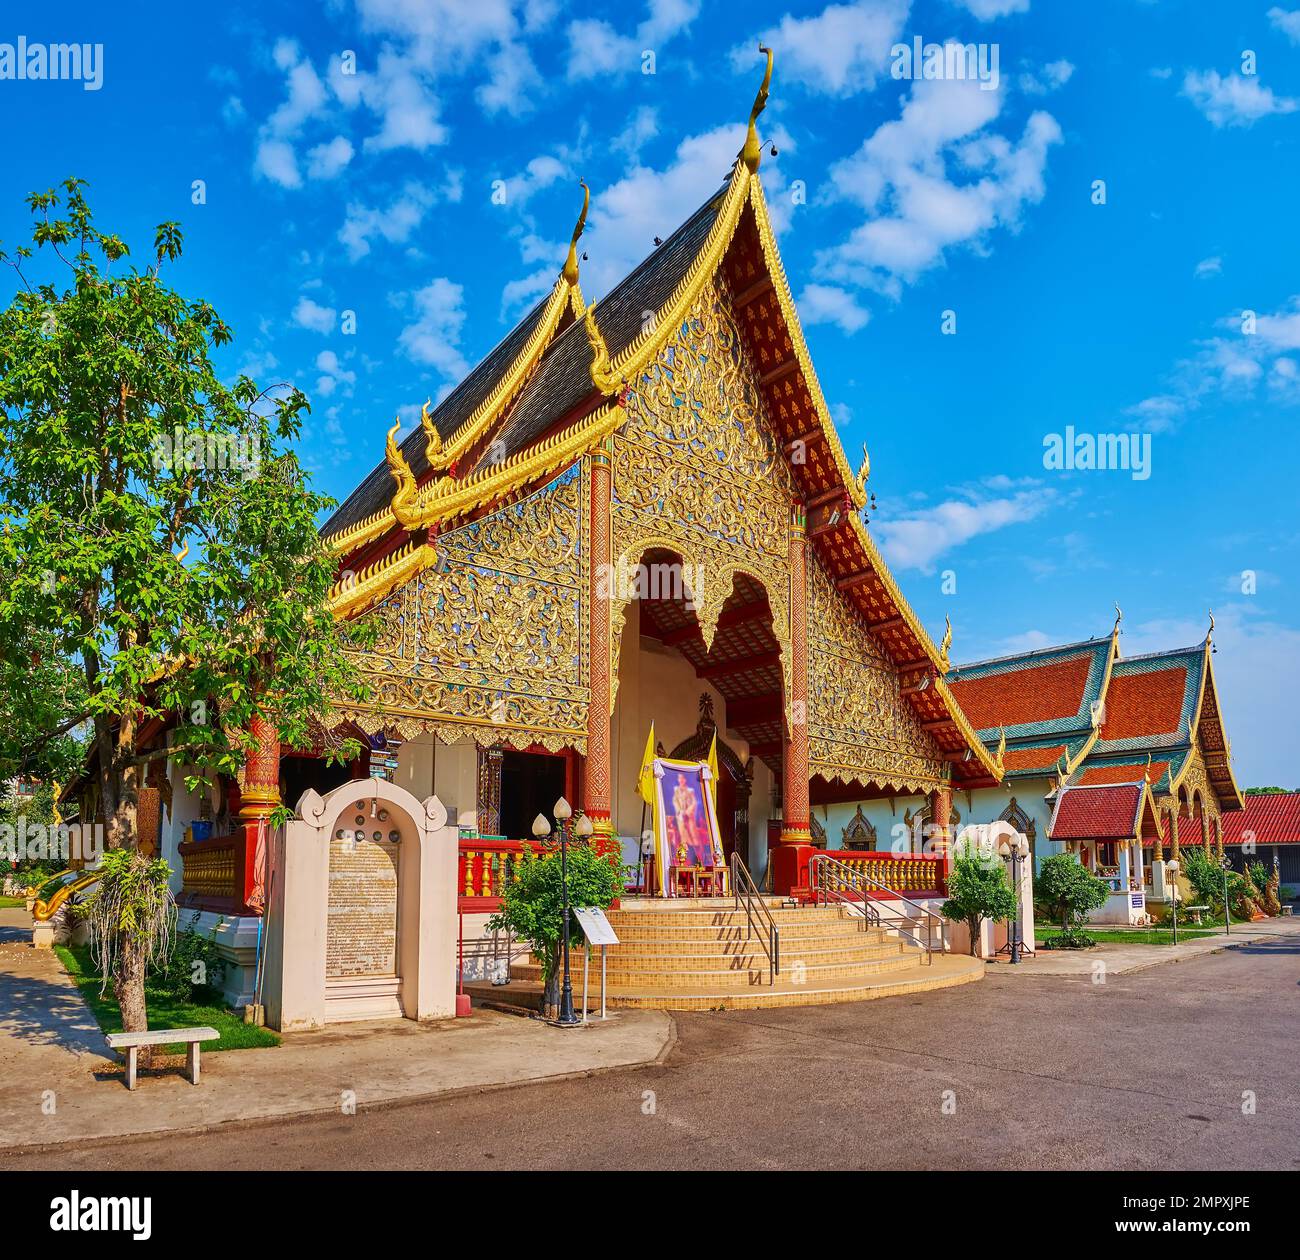 Lanna style ornate Viharns in Wat Chiang Man temple, Chiang Mai, Thailand Stock Photo